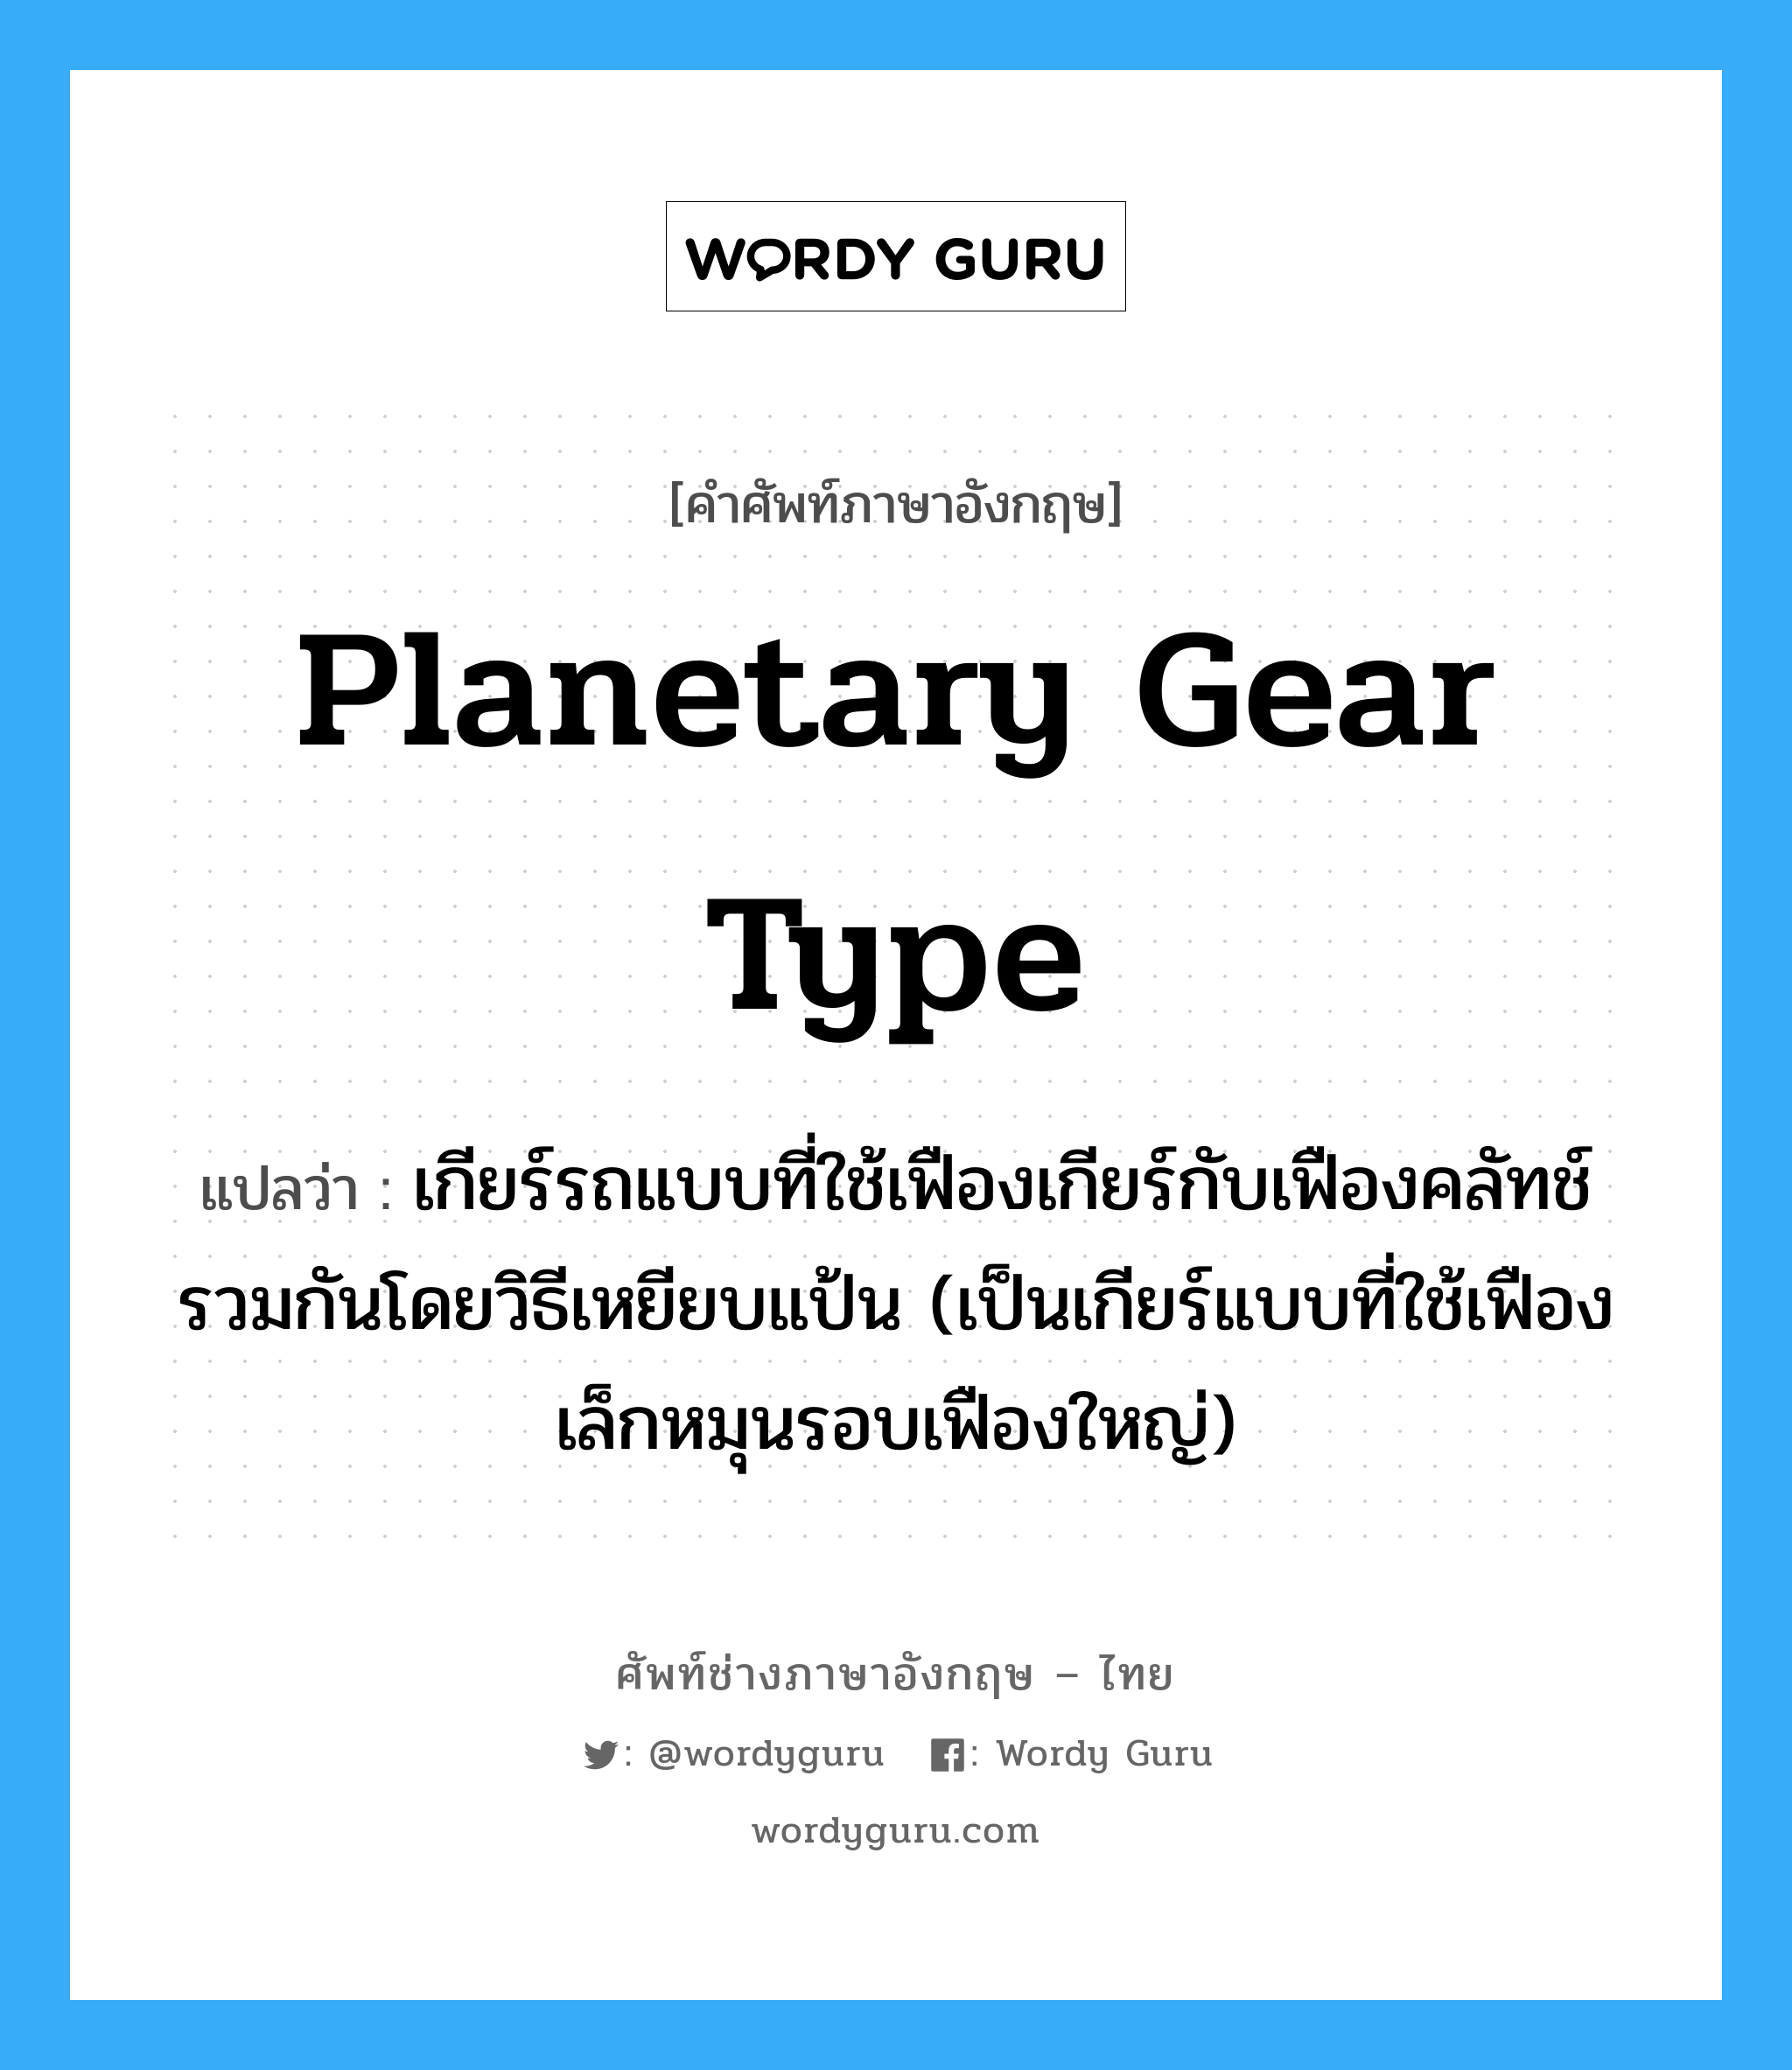 planetary gear type แปลว่า?, คำศัพท์ช่างภาษาอังกฤษ - ไทย planetary gear type คำศัพท์ภาษาอังกฤษ planetary gear type แปลว่า เกียร์รถแบบที่ใช้เฟืองเกียร์กับเฟืองคลัทช์ รวมกันโดยวิธีเหยียบแป้น (เป็นเกียร์แบบที่ใช้เฟืองเล็กหมุนรอบเฟืองใหญ่)